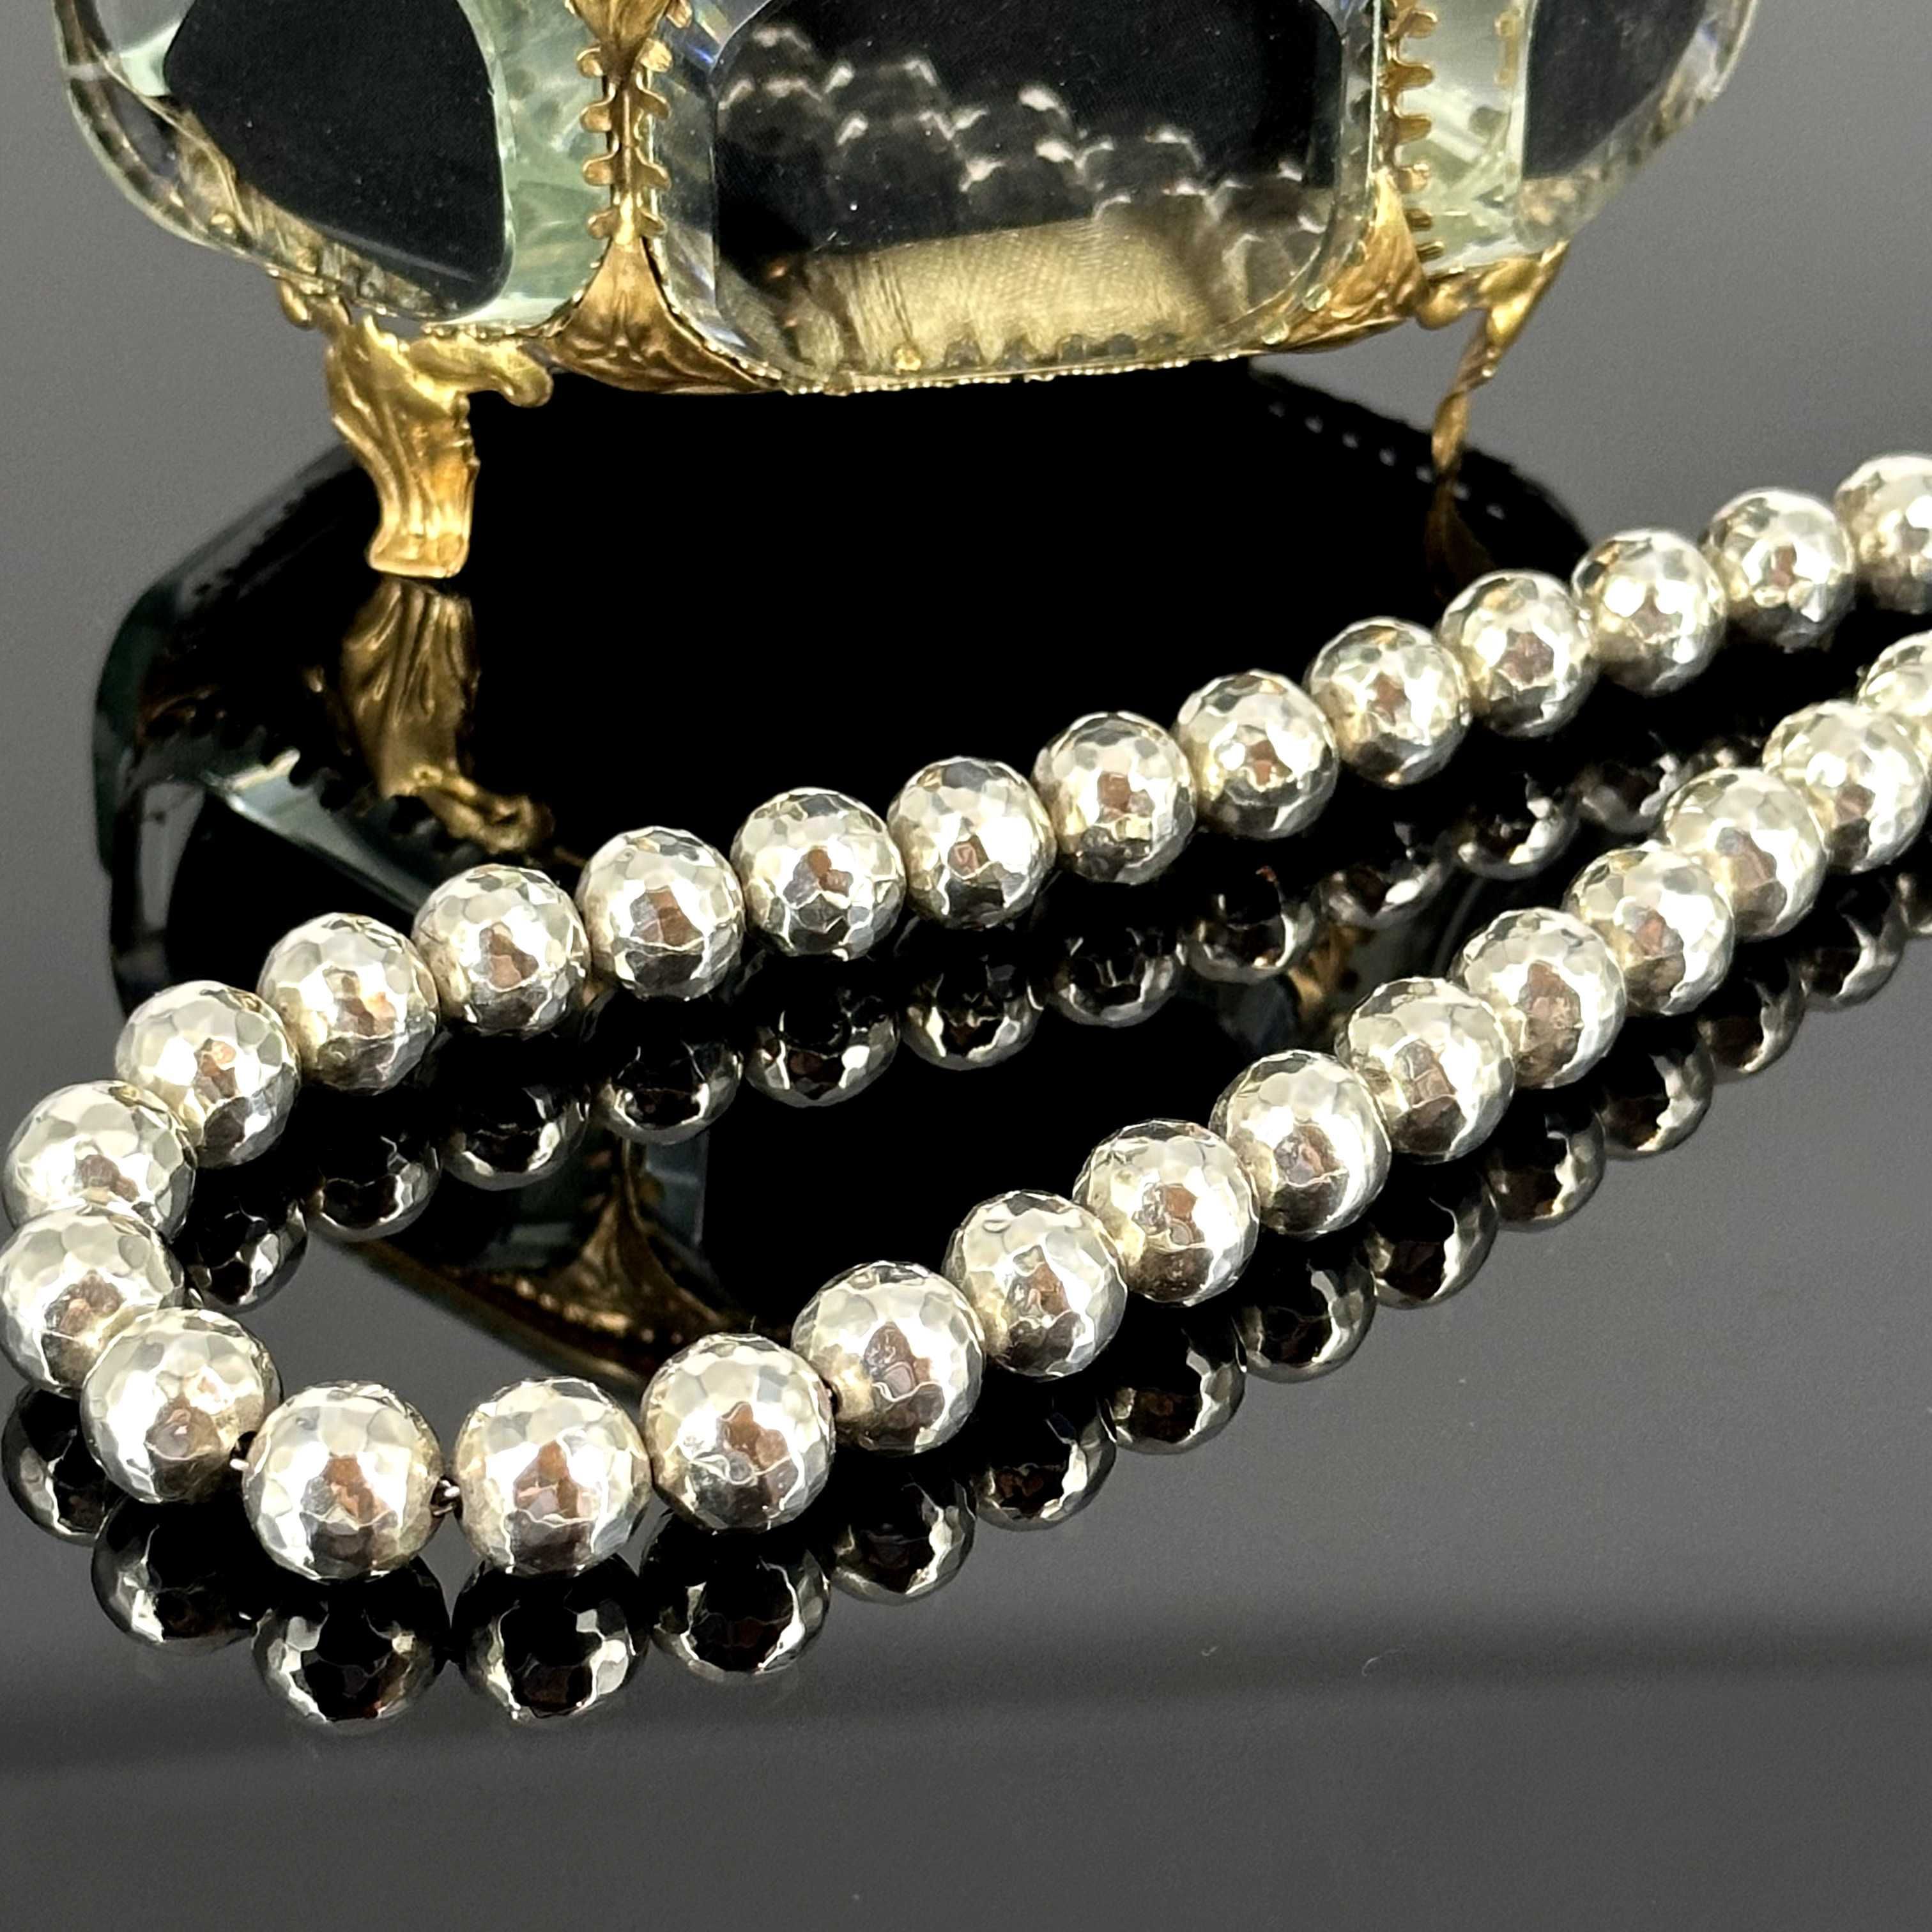 Srebro - Srebrne naszyjnik z korali srebrnych - próba srebra 925